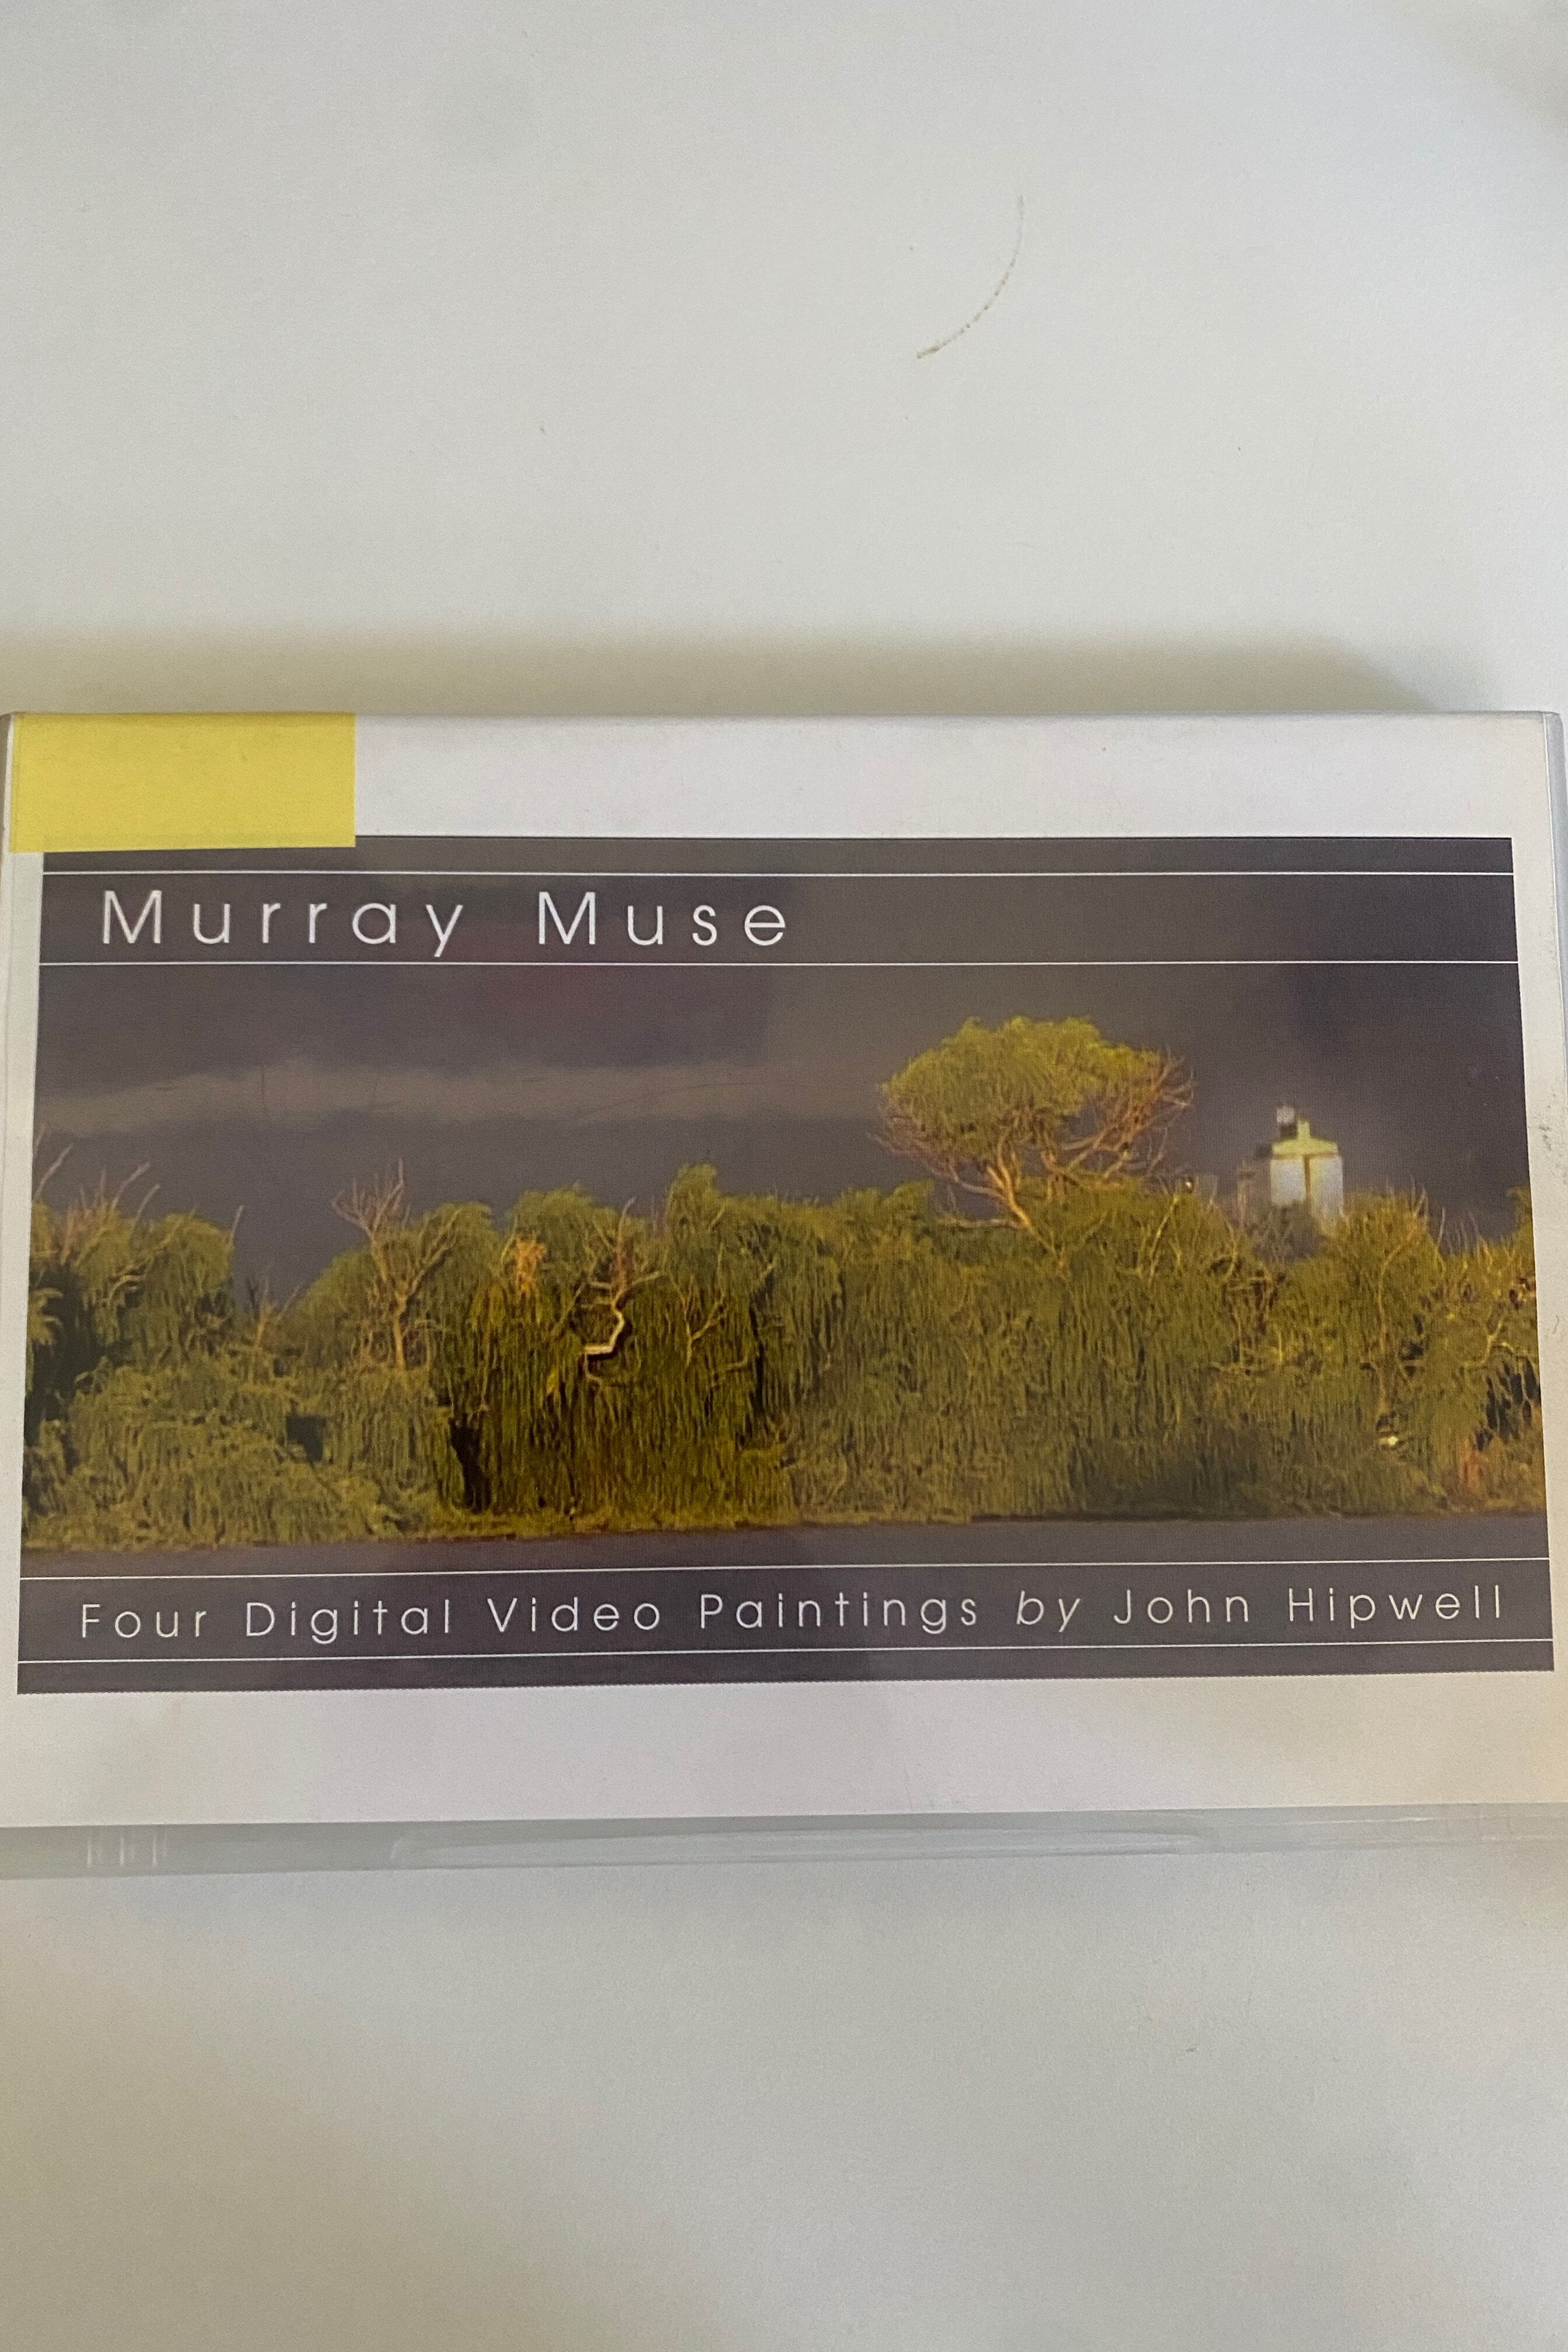 Murray Muse2